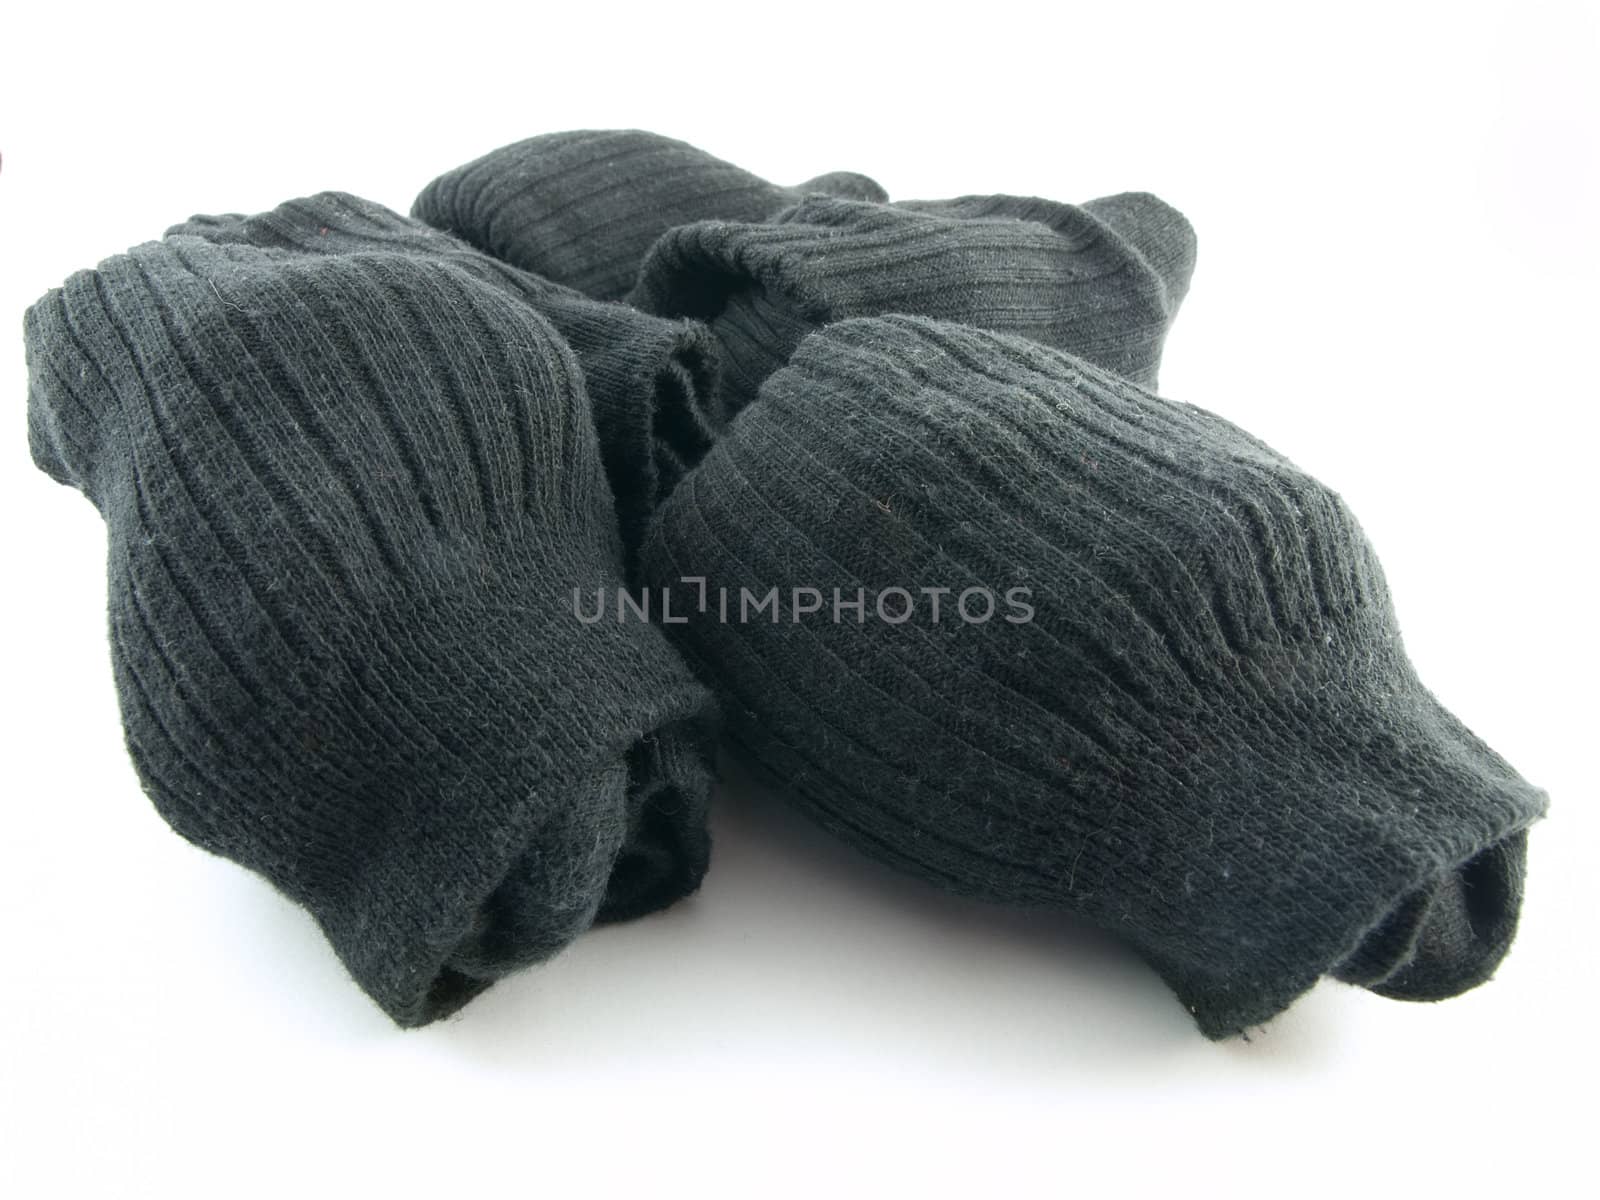 Plain Black Socks on White Background by bobbigmac